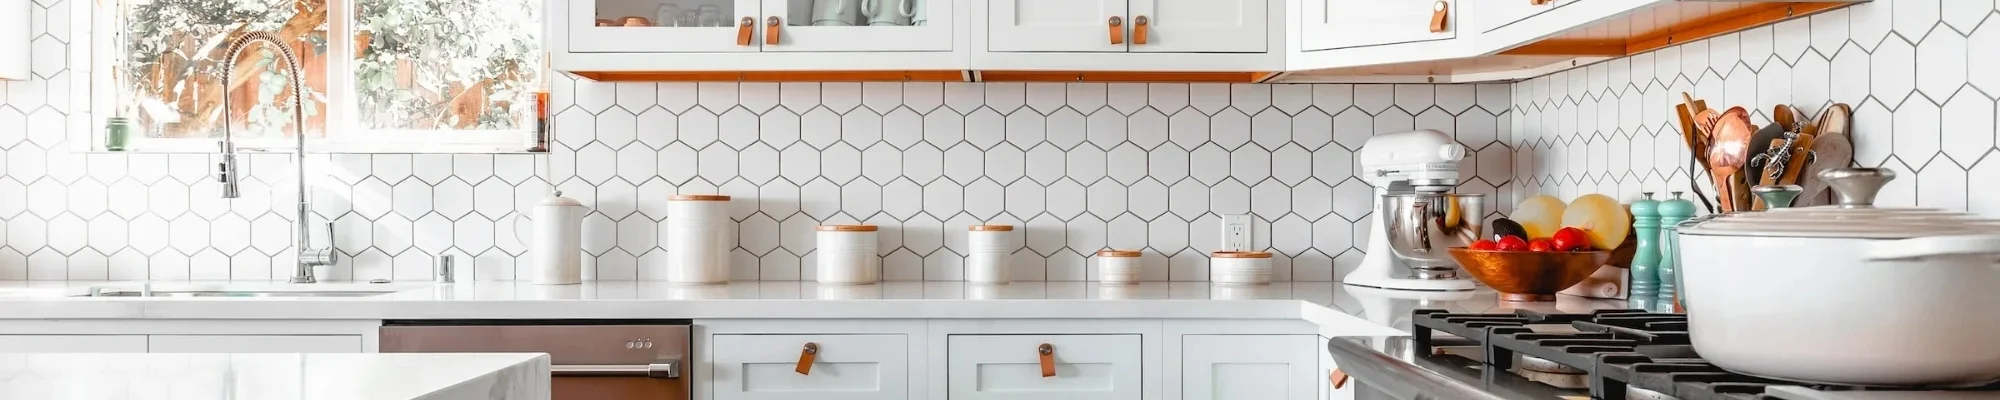 Tile kitchen backsplash | Altimate Flooring  | Rapid City, SD